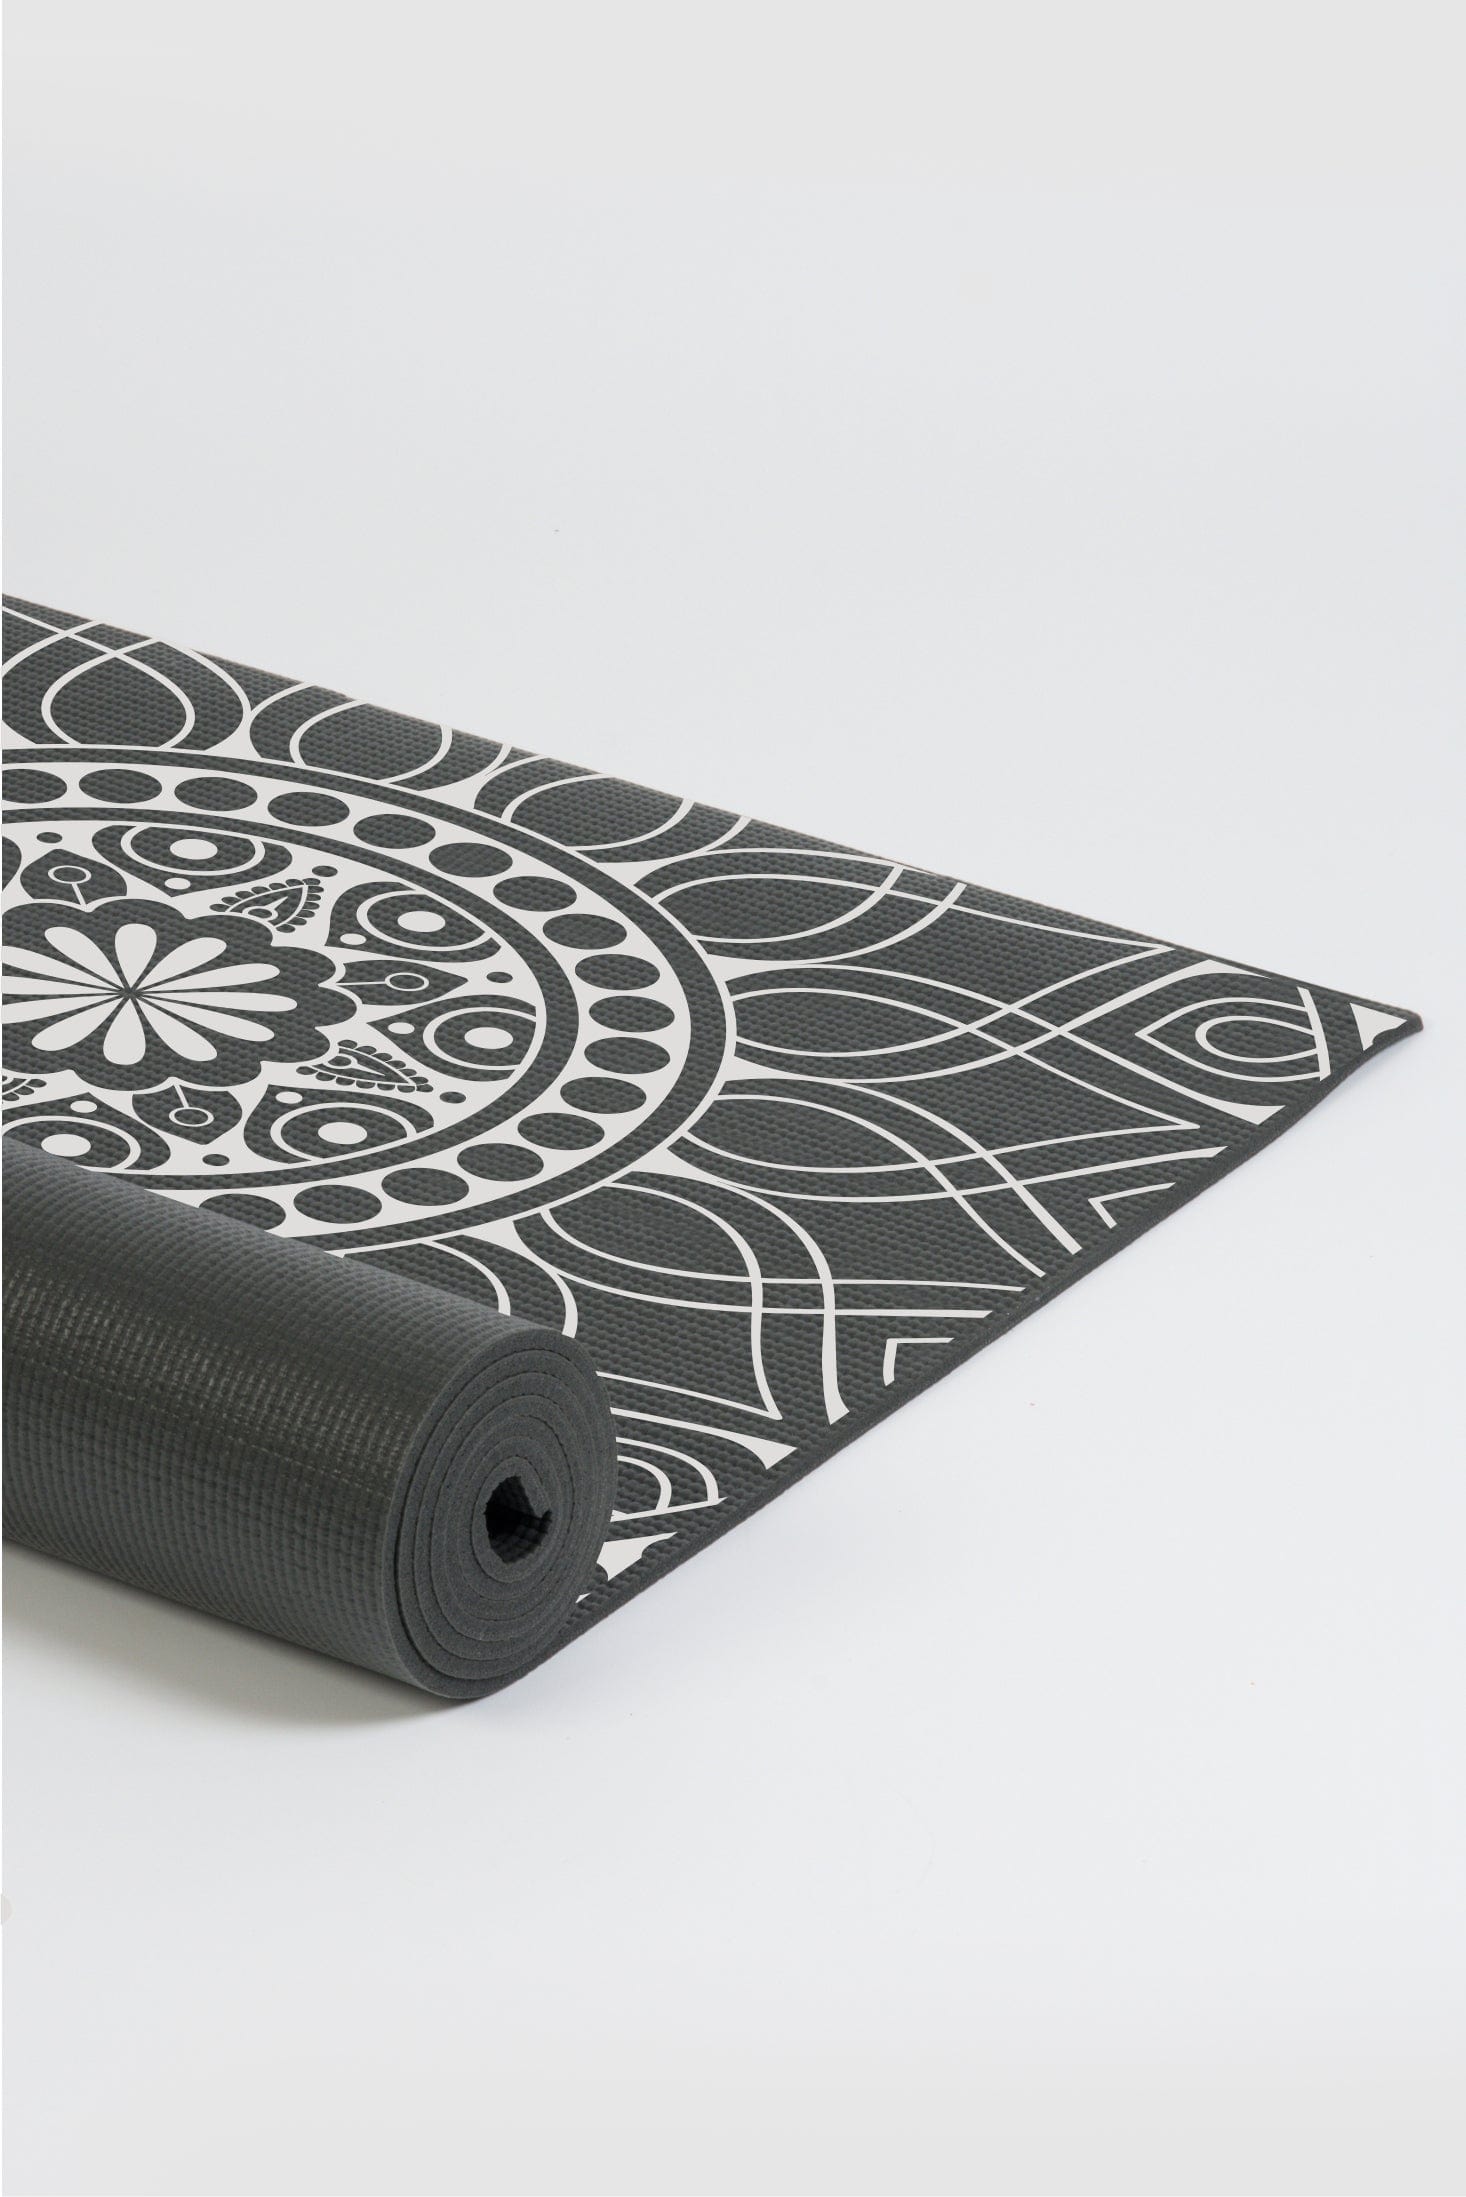 Yoga Studio Yoga Mat Yoga Studio Designed Grey Dew Drop Mandala Yoga Mat 6mm